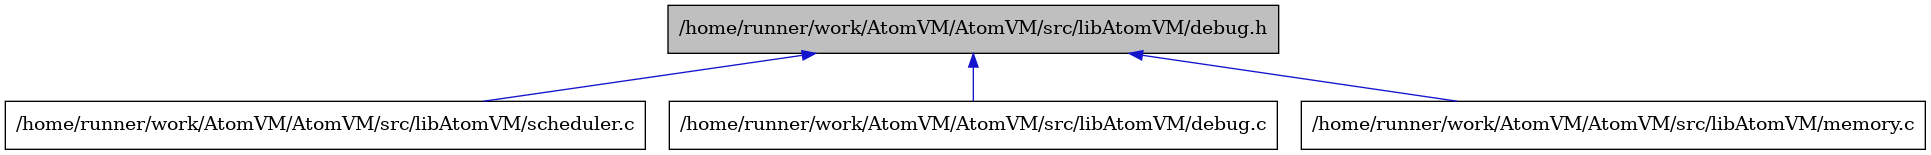 digraph {
    graph [bgcolor="#00000000"]
    node [shape=rectangle style=filled fillcolor="#FFFFFF" font=Helvetica padding=2]
    edge [color="#1414CE"]
    "4" [label="/home/runner/work/AtomVM/AtomVM/src/libAtomVM/scheduler.c" tooltip="/home/runner/work/AtomVM/AtomVM/src/libAtomVM/scheduler.c"]
    "2" [label="/home/runner/work/AtomVM/AtomVM/src/libAtomVM/debug.c" tooltip="/home/runner/work/AtomVM/AtomVM/src/libAtomVM/debug.c"]
    "1" [label="/home/runner/work/AtomVM/AtomVM/src/libAtomVM/debug.h" tooltip="/home/runner/work/AtomVM/AtomVM/src/libAtomVM/debug.h" fillcolor="#BFBFBF"]
    "3" [label="/home/runner/work/AtomVM/AtomVM/src/libAtomVM/memory.c" tooltip="/home/runner/work/AtomVM/AtomVM/src/libAtomVM/memory.c"]
    "1" -> "2" [dir=back tooltip="include"]
    "1" -> "3" [dir=back tooltip="include"]
    "1" -> "4" [dir=back tooltip="include"]
}